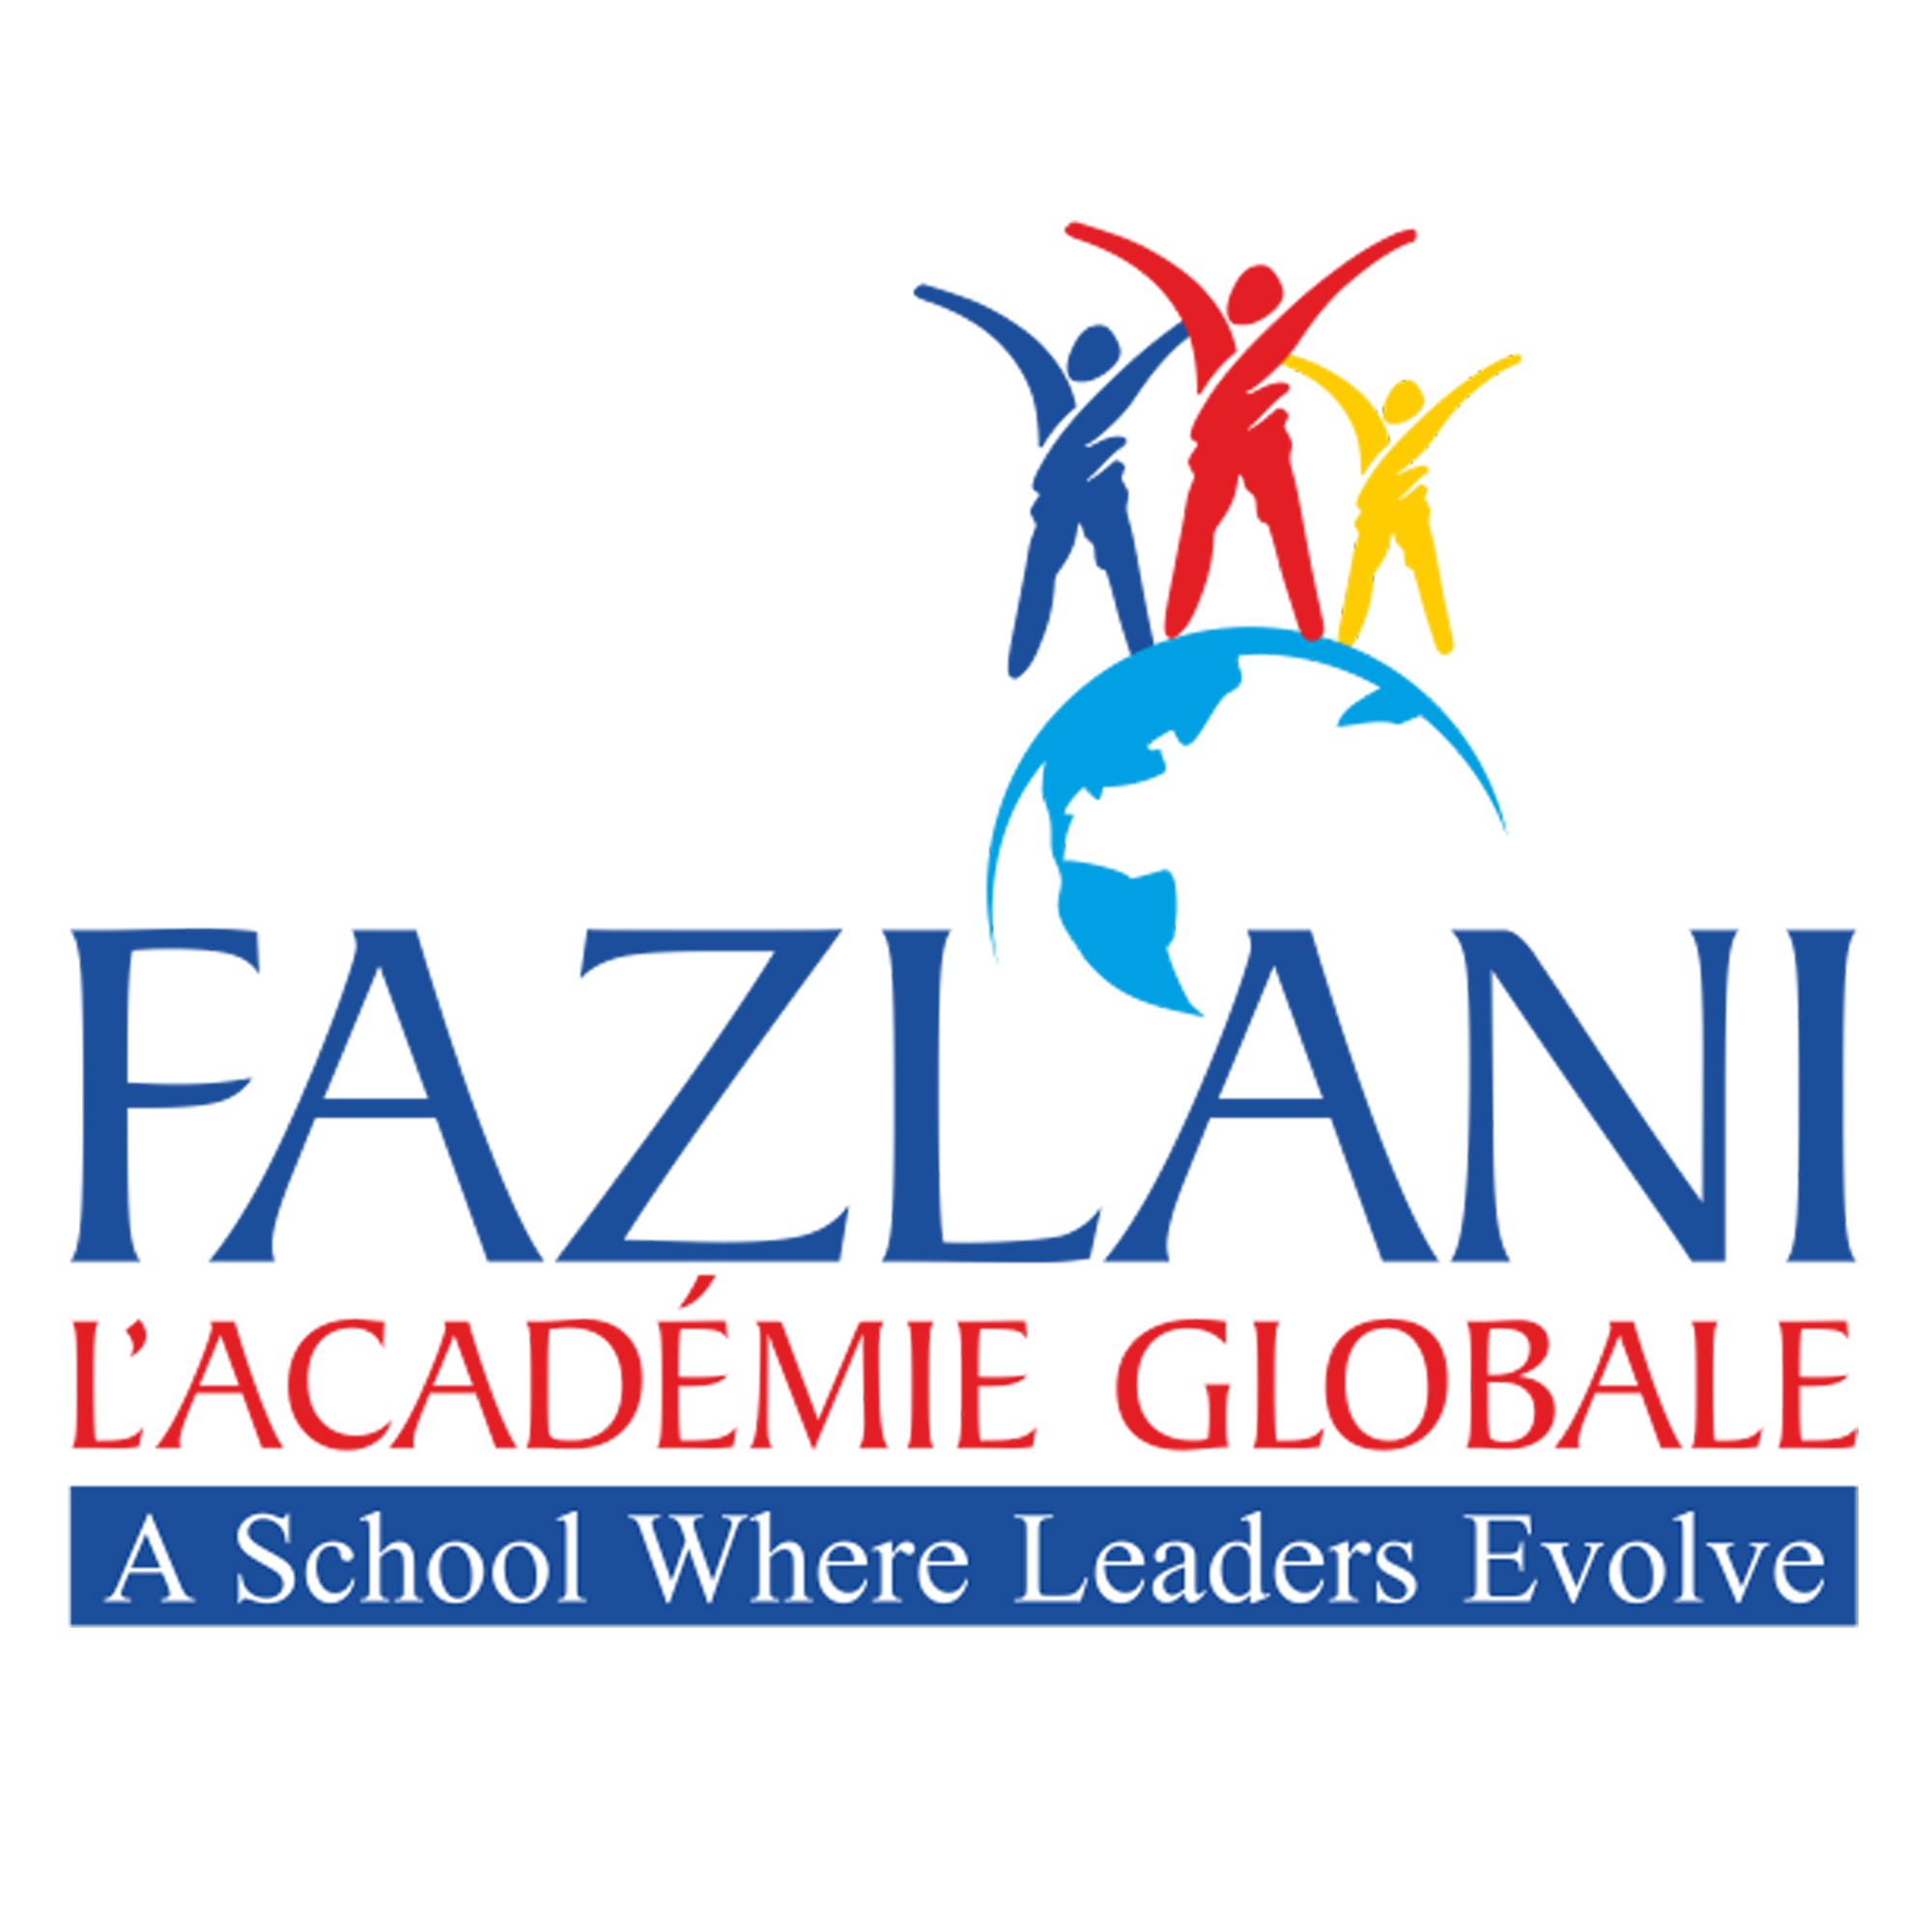 Fazlani school